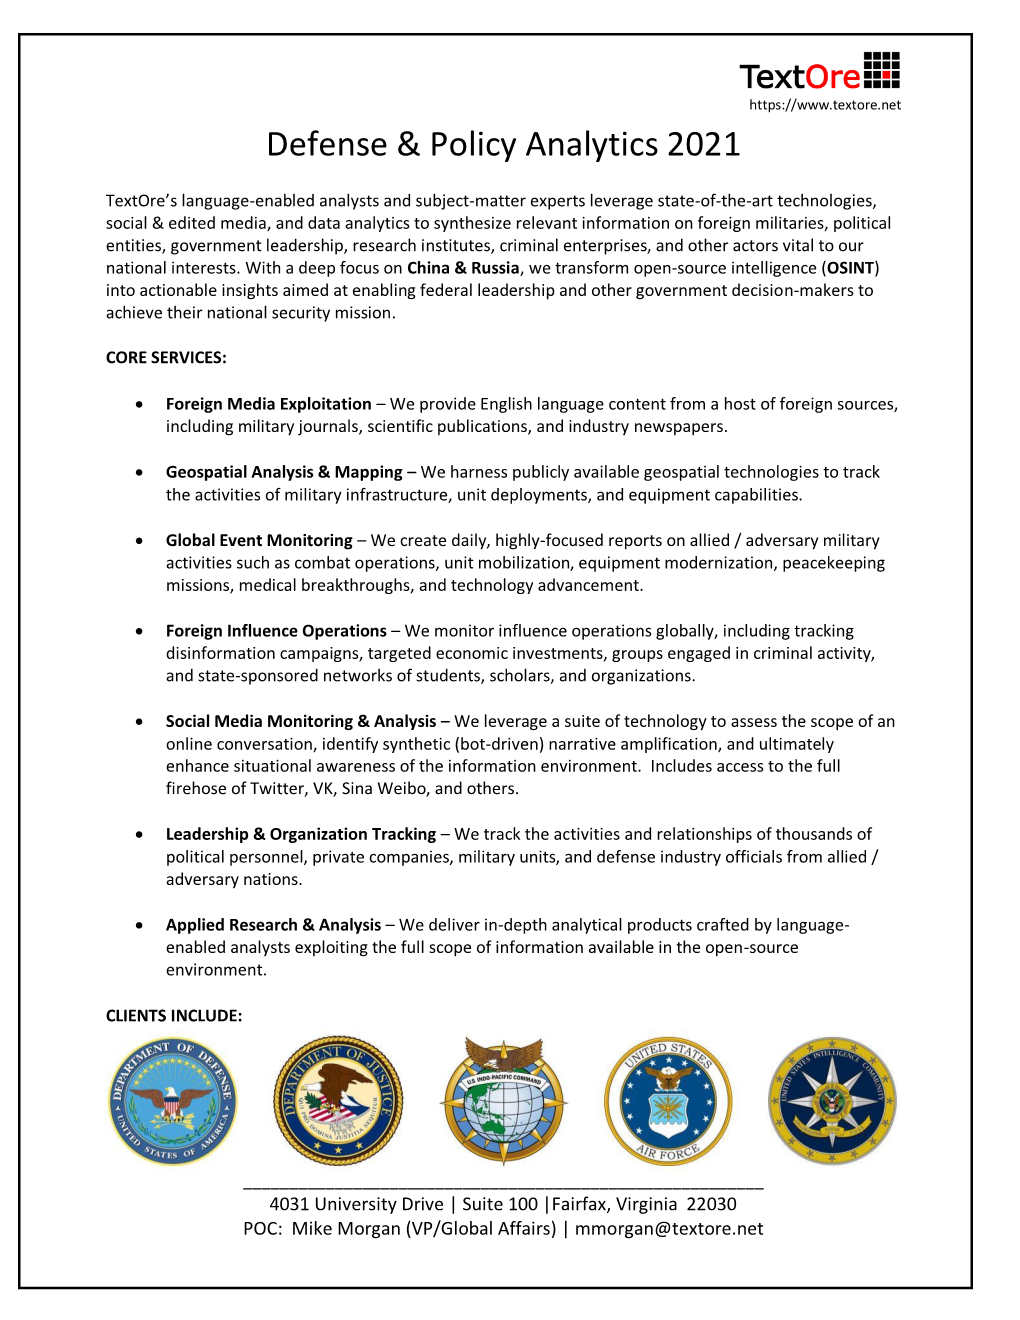 Defense & Policy Analytics 2021